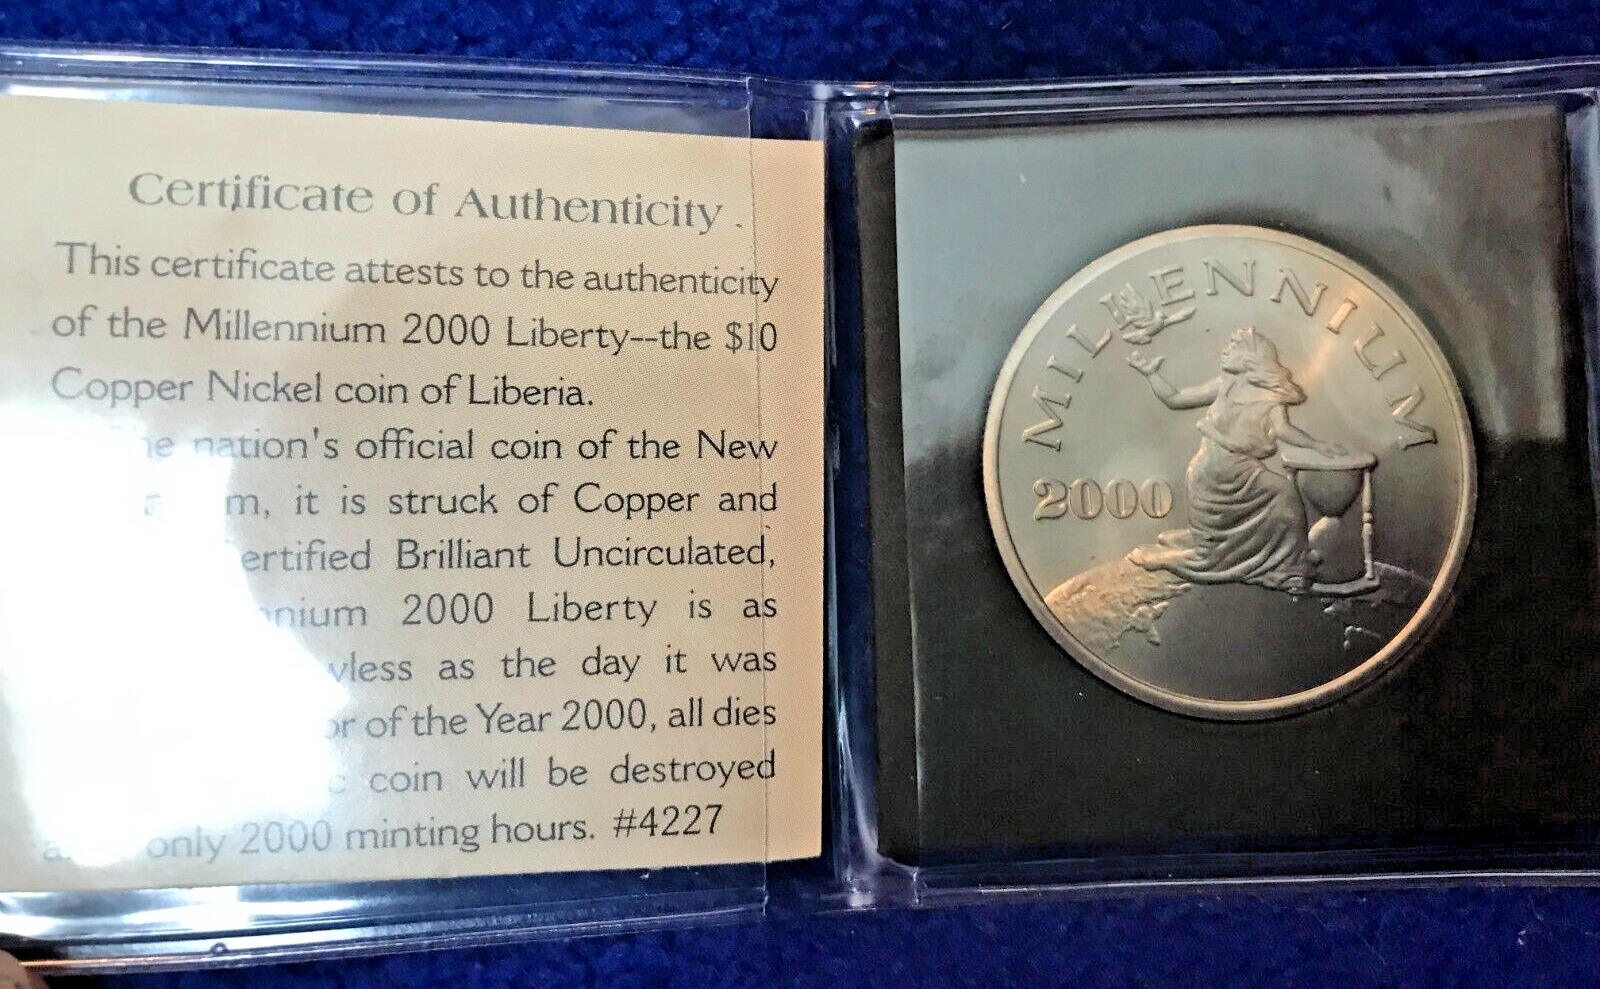 Millennium 2000 Liberty $10 Copper Nickel Coin